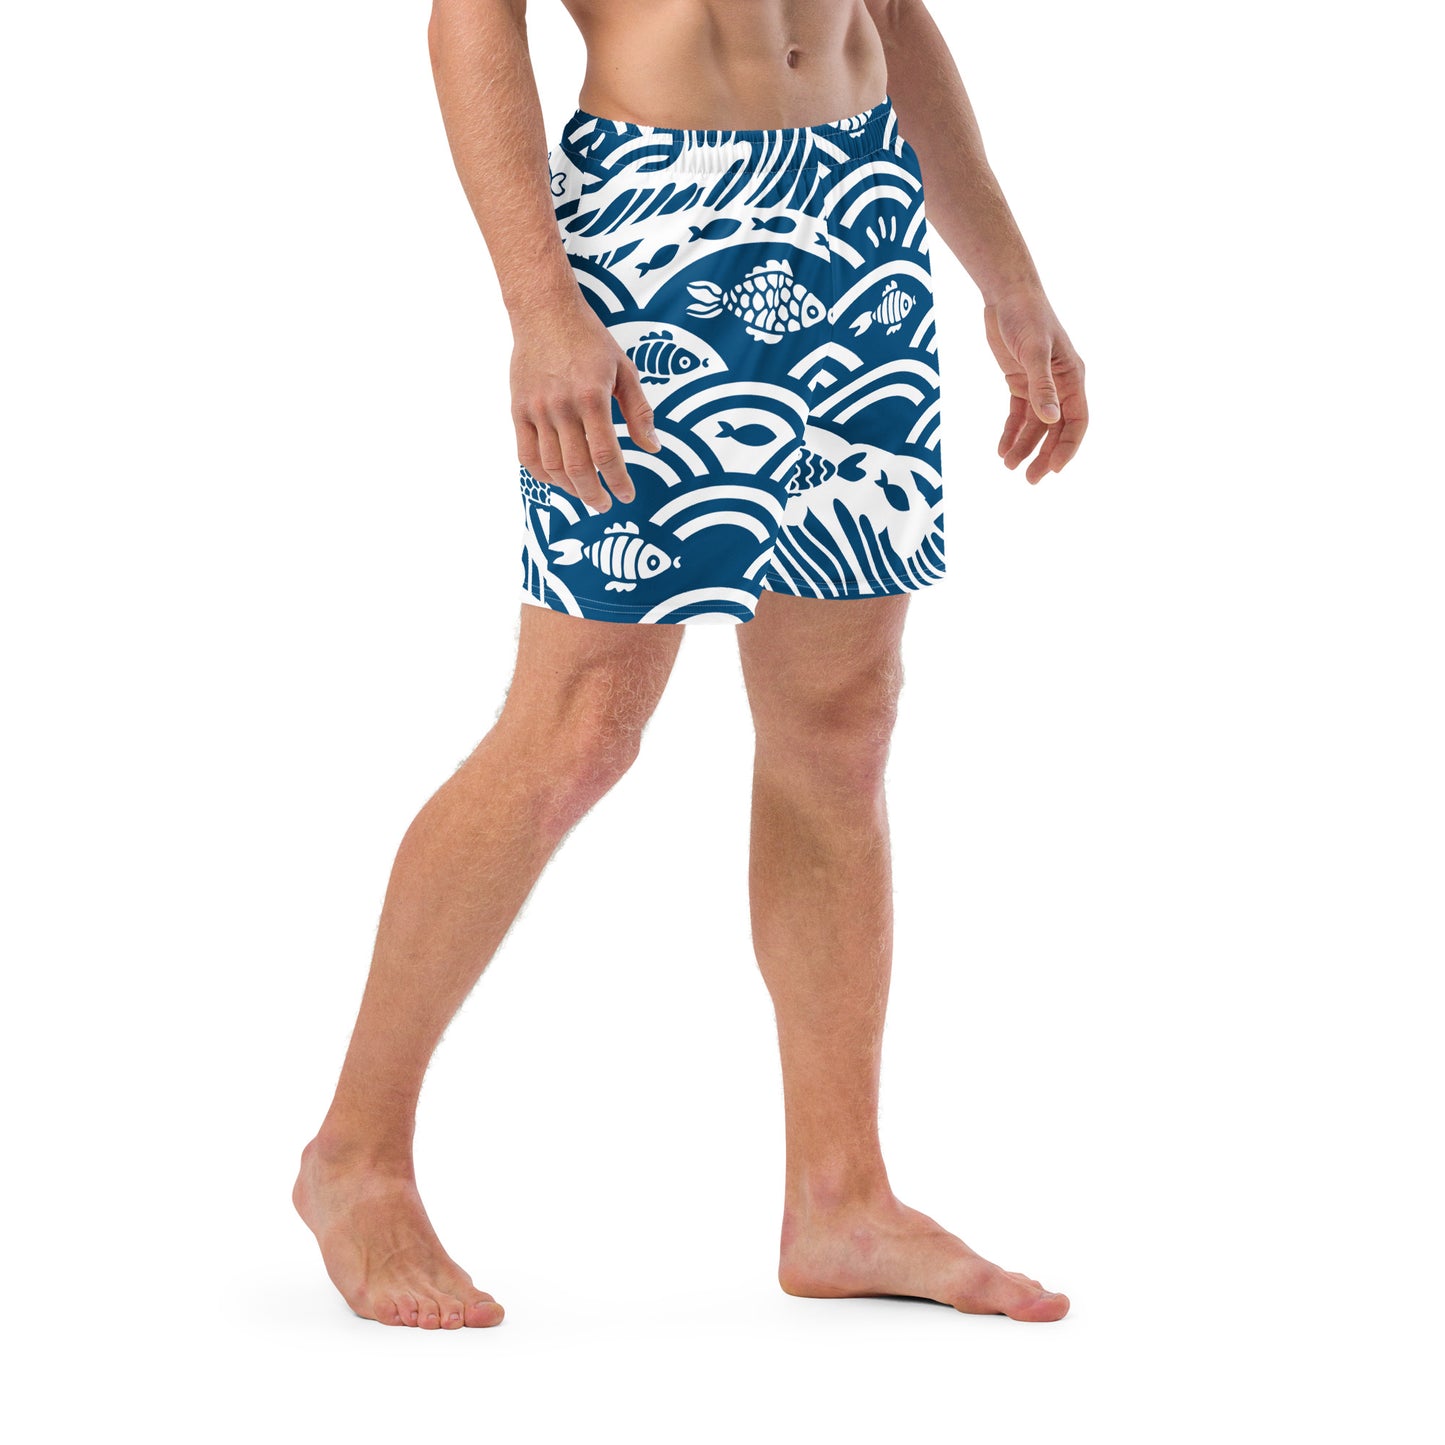 FISHY - Men's swim trunks